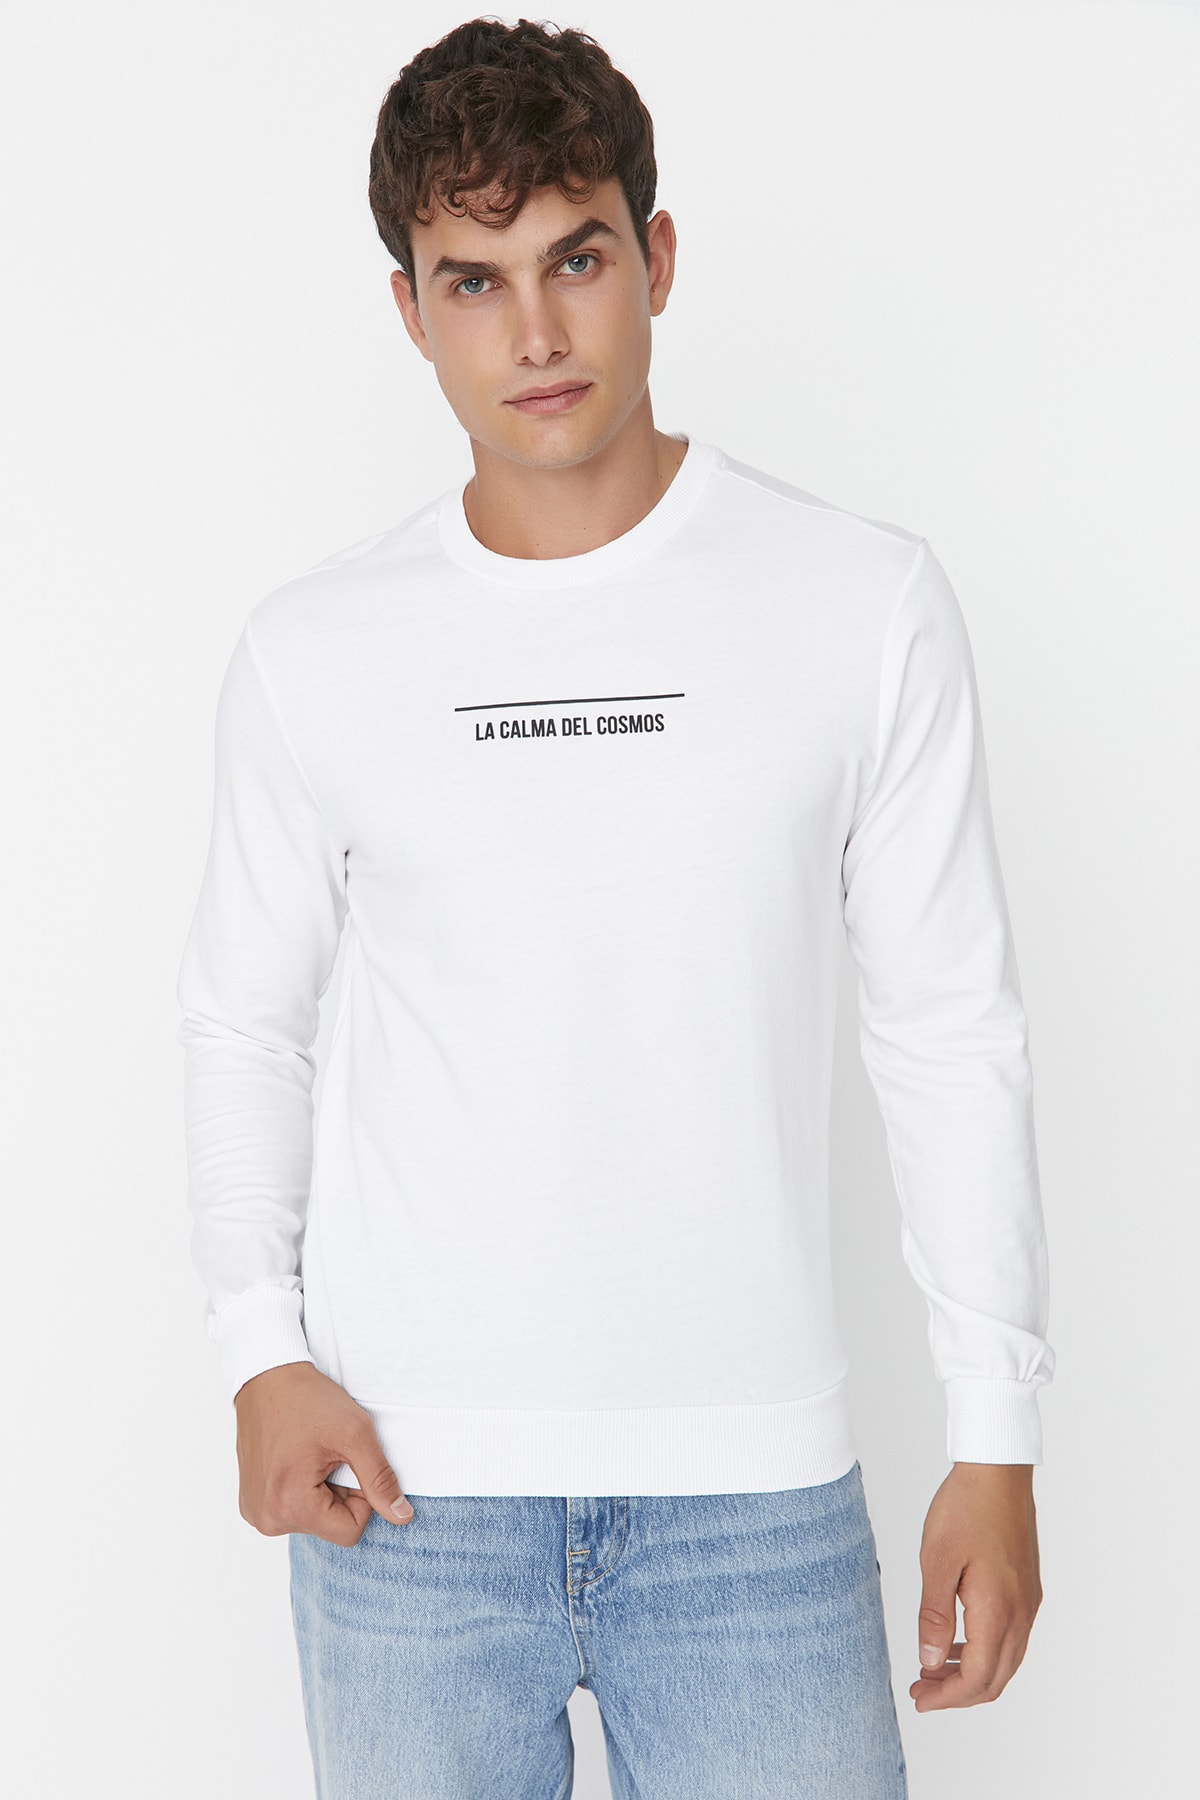 Trendyol White Men's Regular/Regular Cut Crew Neck Long Sleeved Cotton Sweatshirt